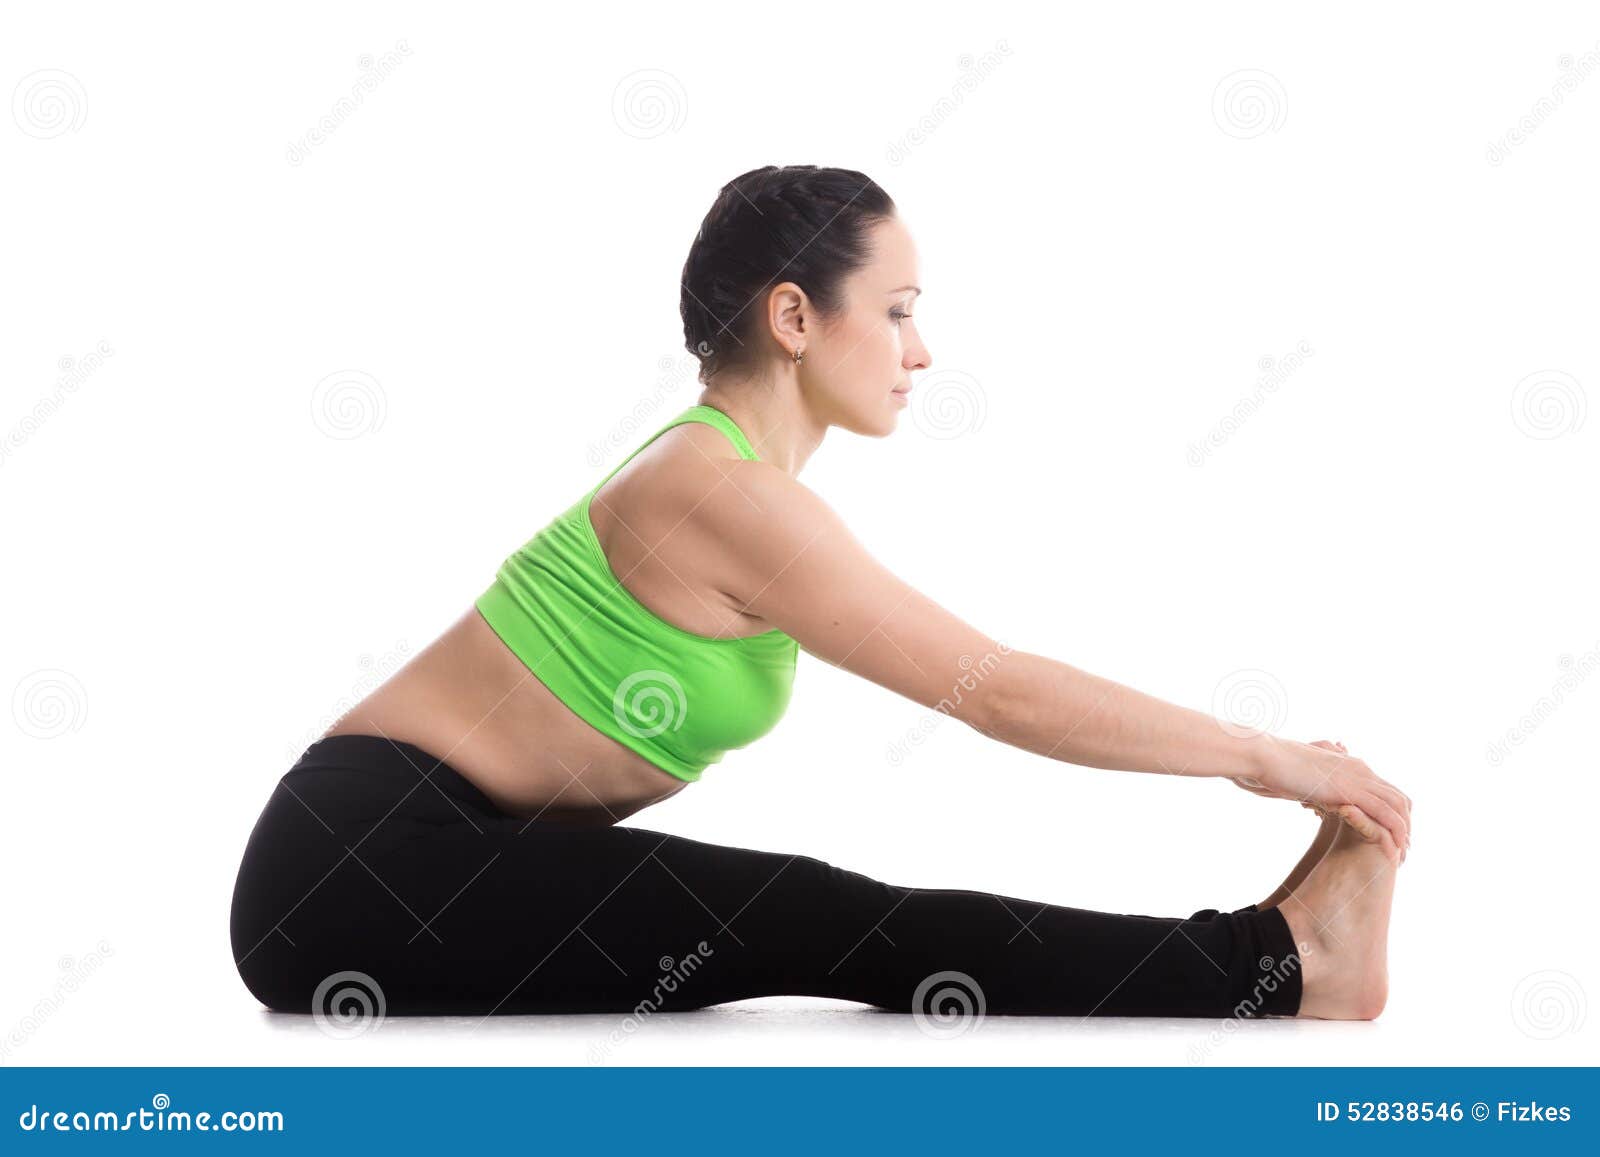 Paschimottanasana Yoga Pose Stock Photo - Image: 52838546